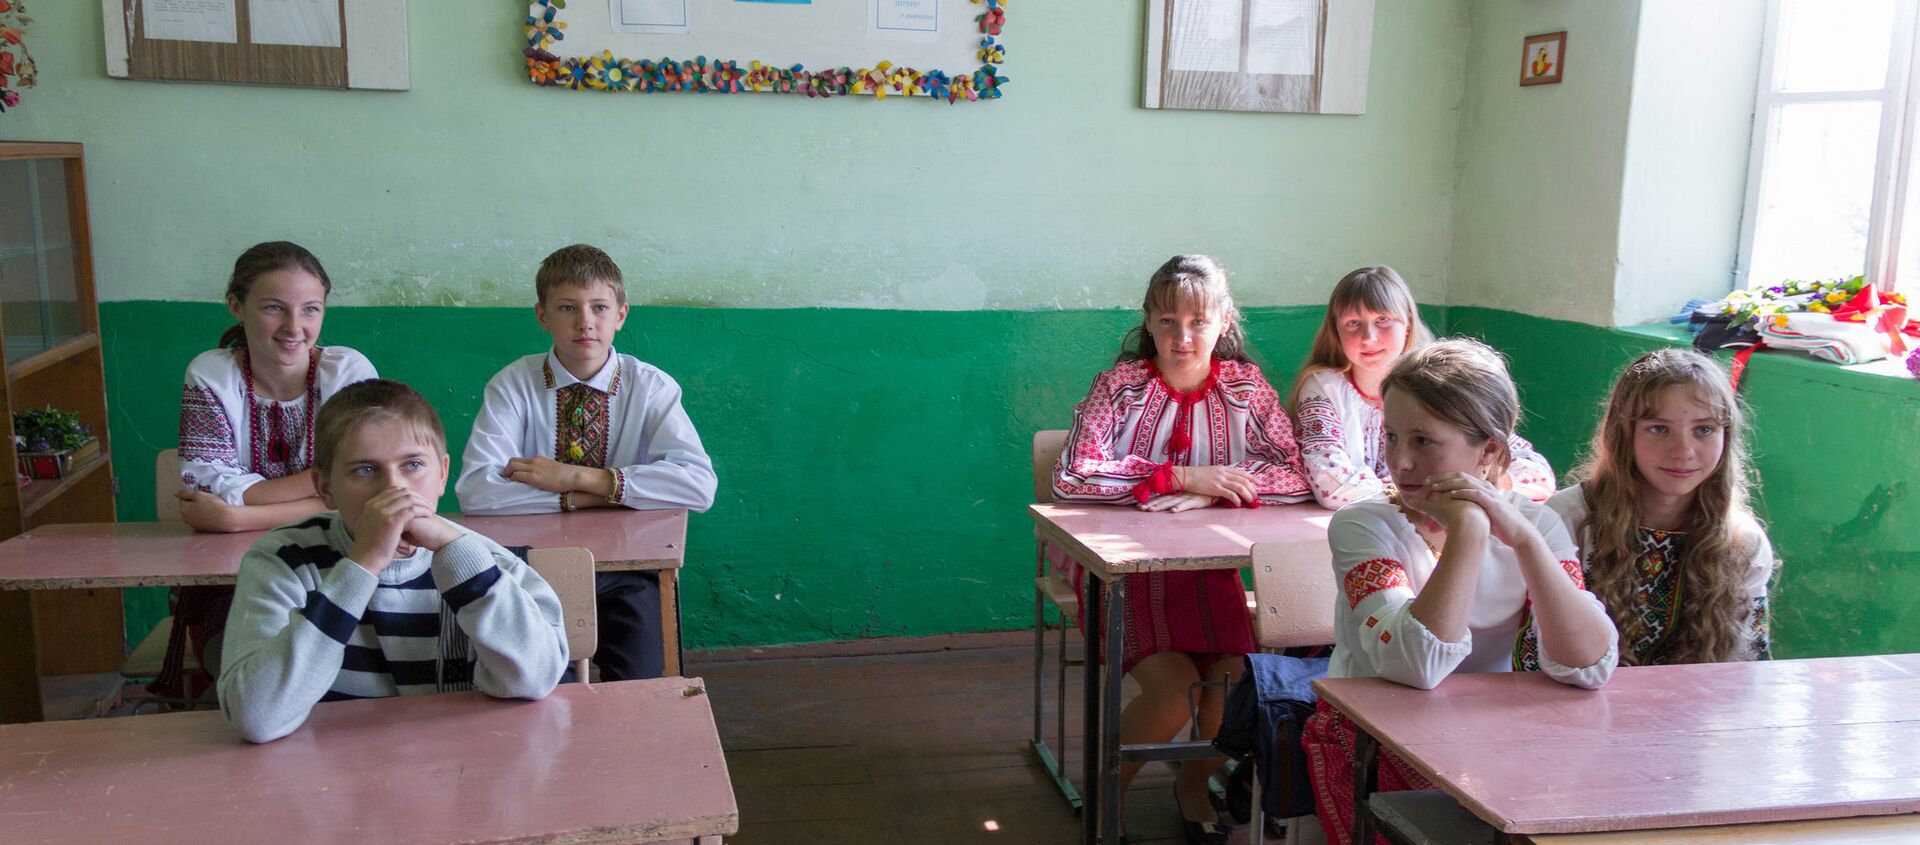 Students at a school in Ukraine, file photo. - Sputnik International, 1920, 16.02.2018